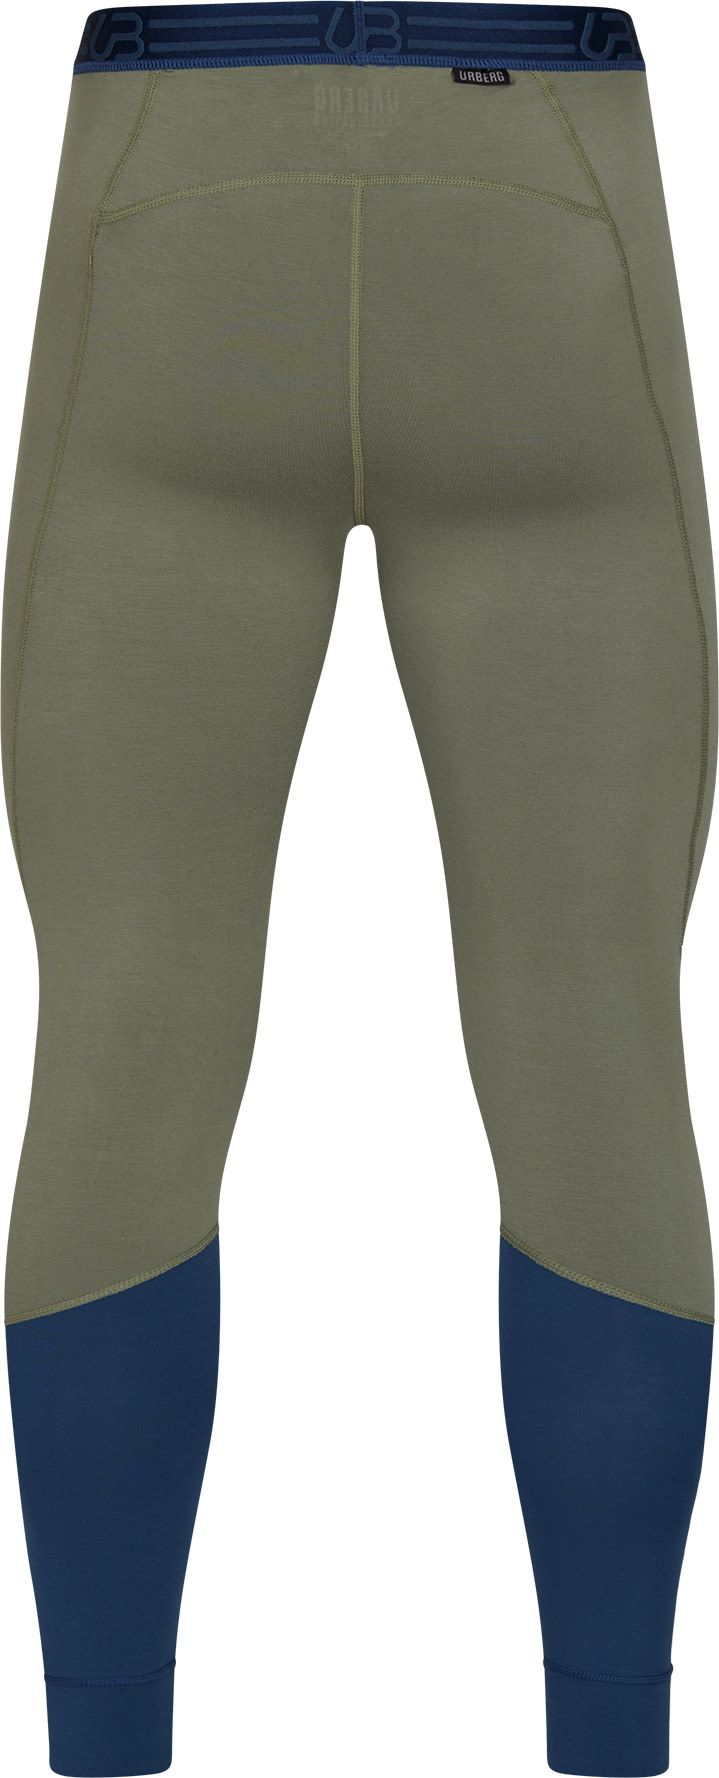 Men's Gjota Bamboo Pants DeepLichengreen Urberg